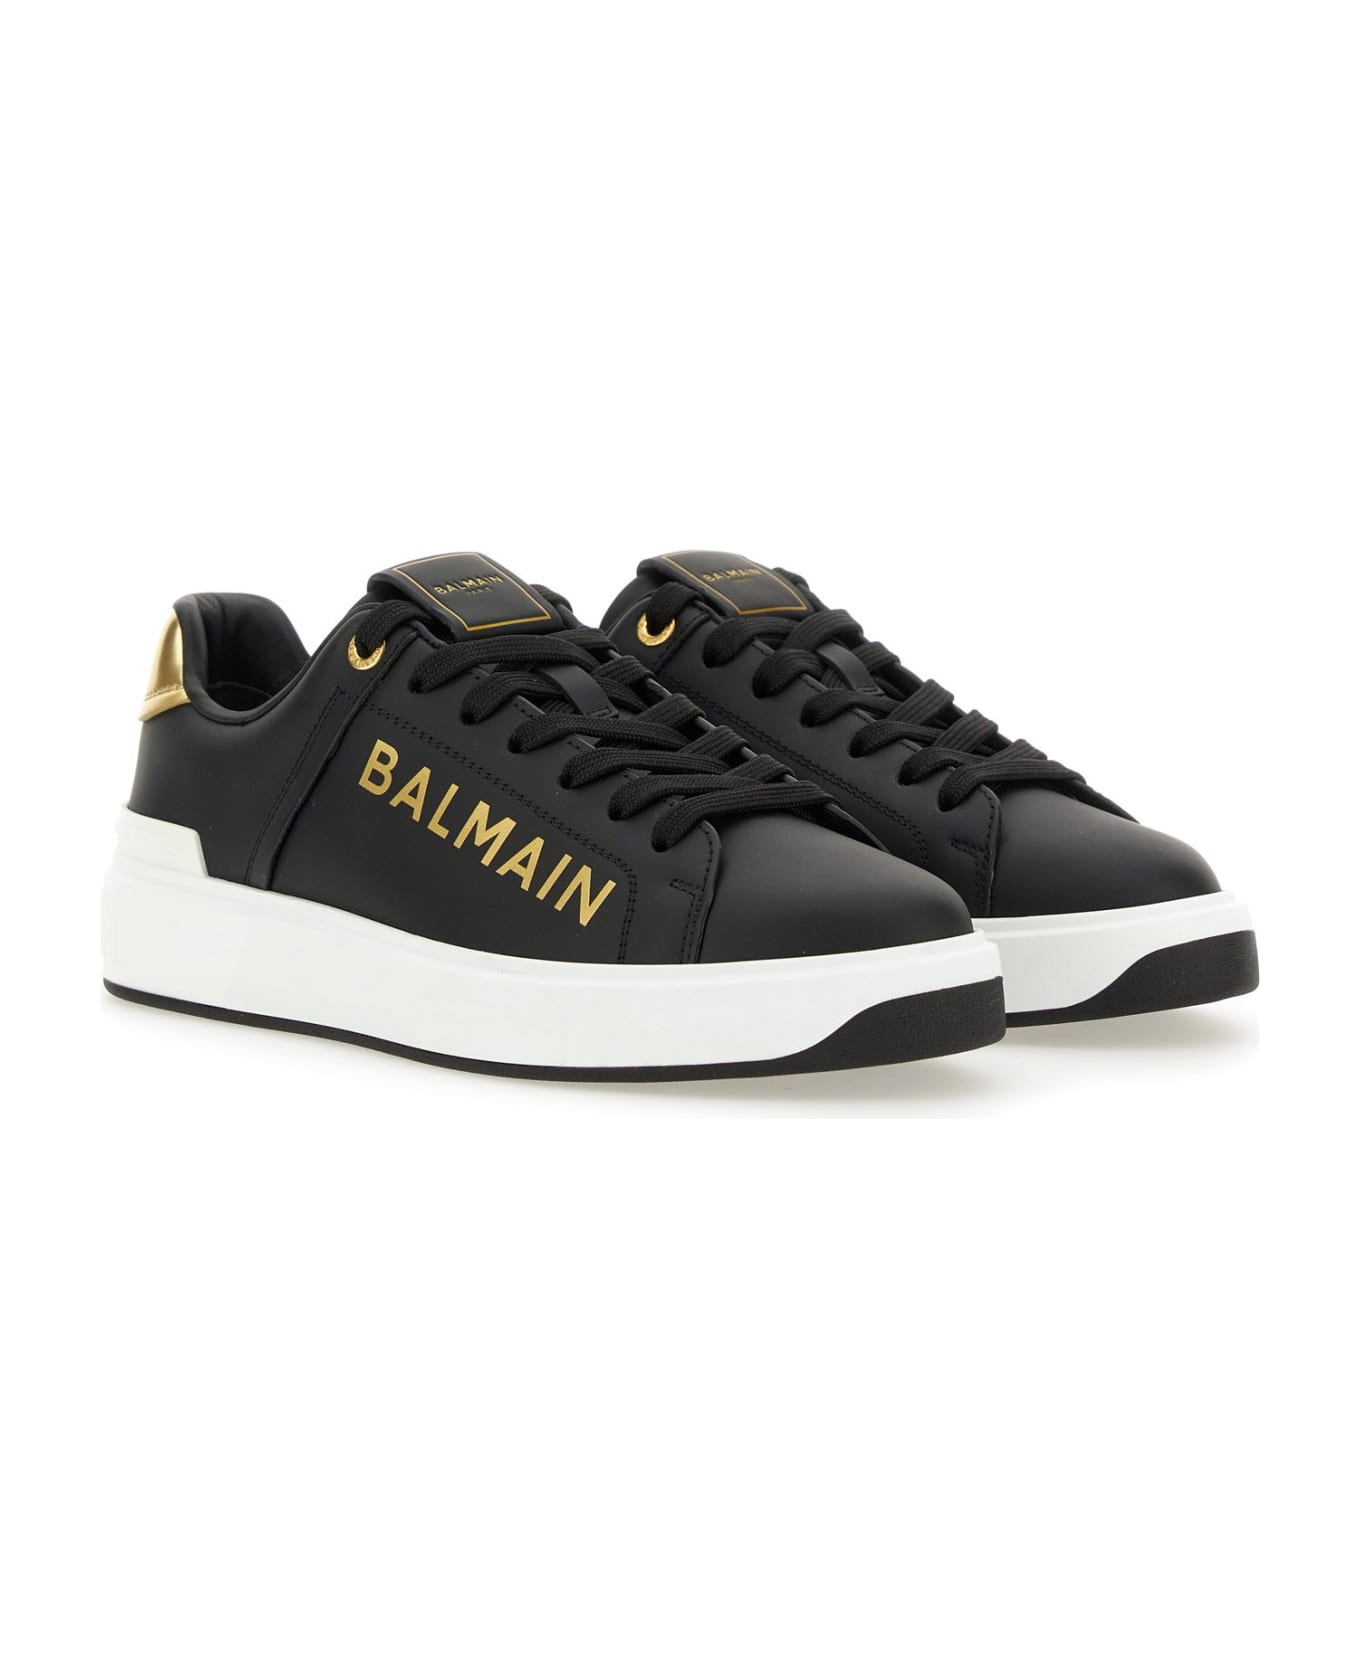 Balmain B-court Sneaker - Black/Gold スニーカー